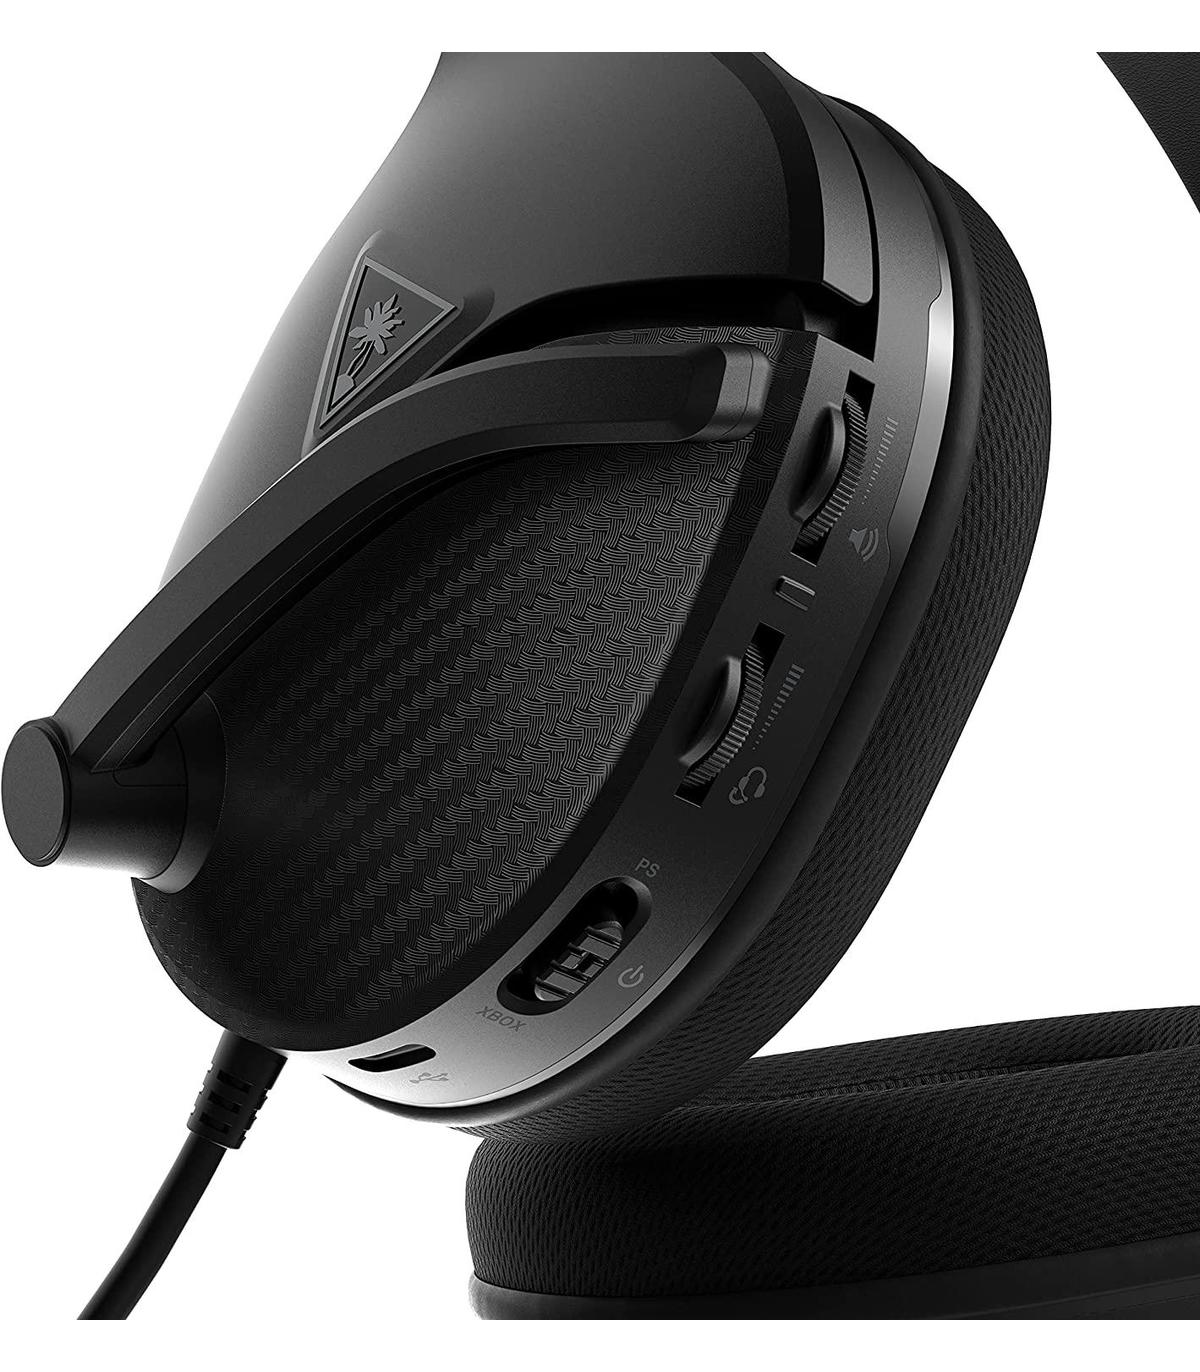 Auriculares Sony Pulse 3D Inalambricos para PS4 y PS5 3D Audio Dual Mic -  Negro Perifericos Auricula